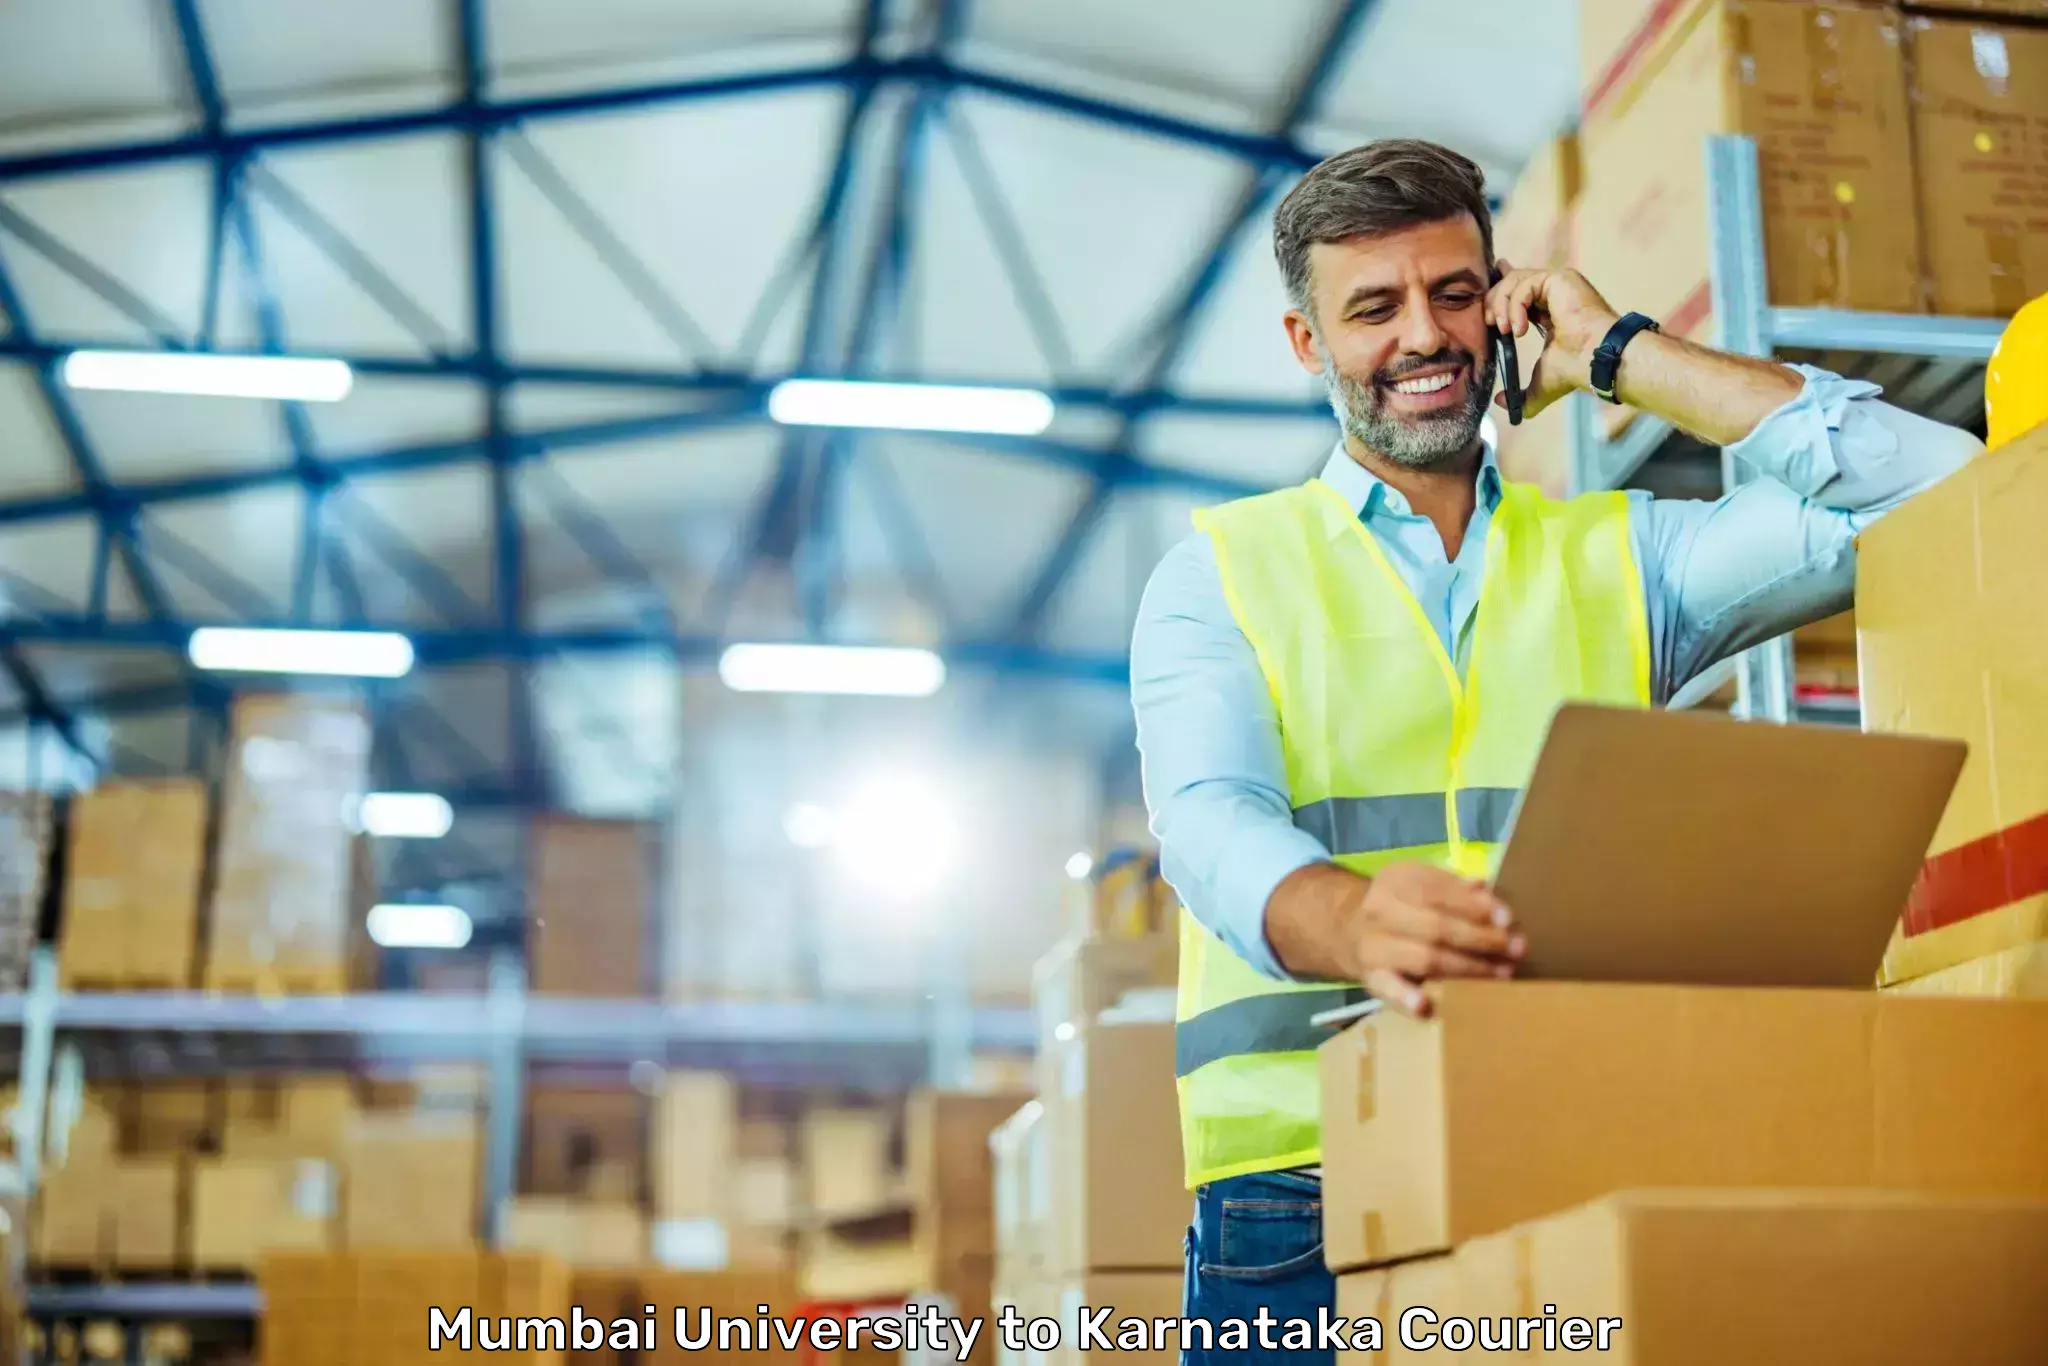 Efficient courier operations in Mumbai University to Yellapur